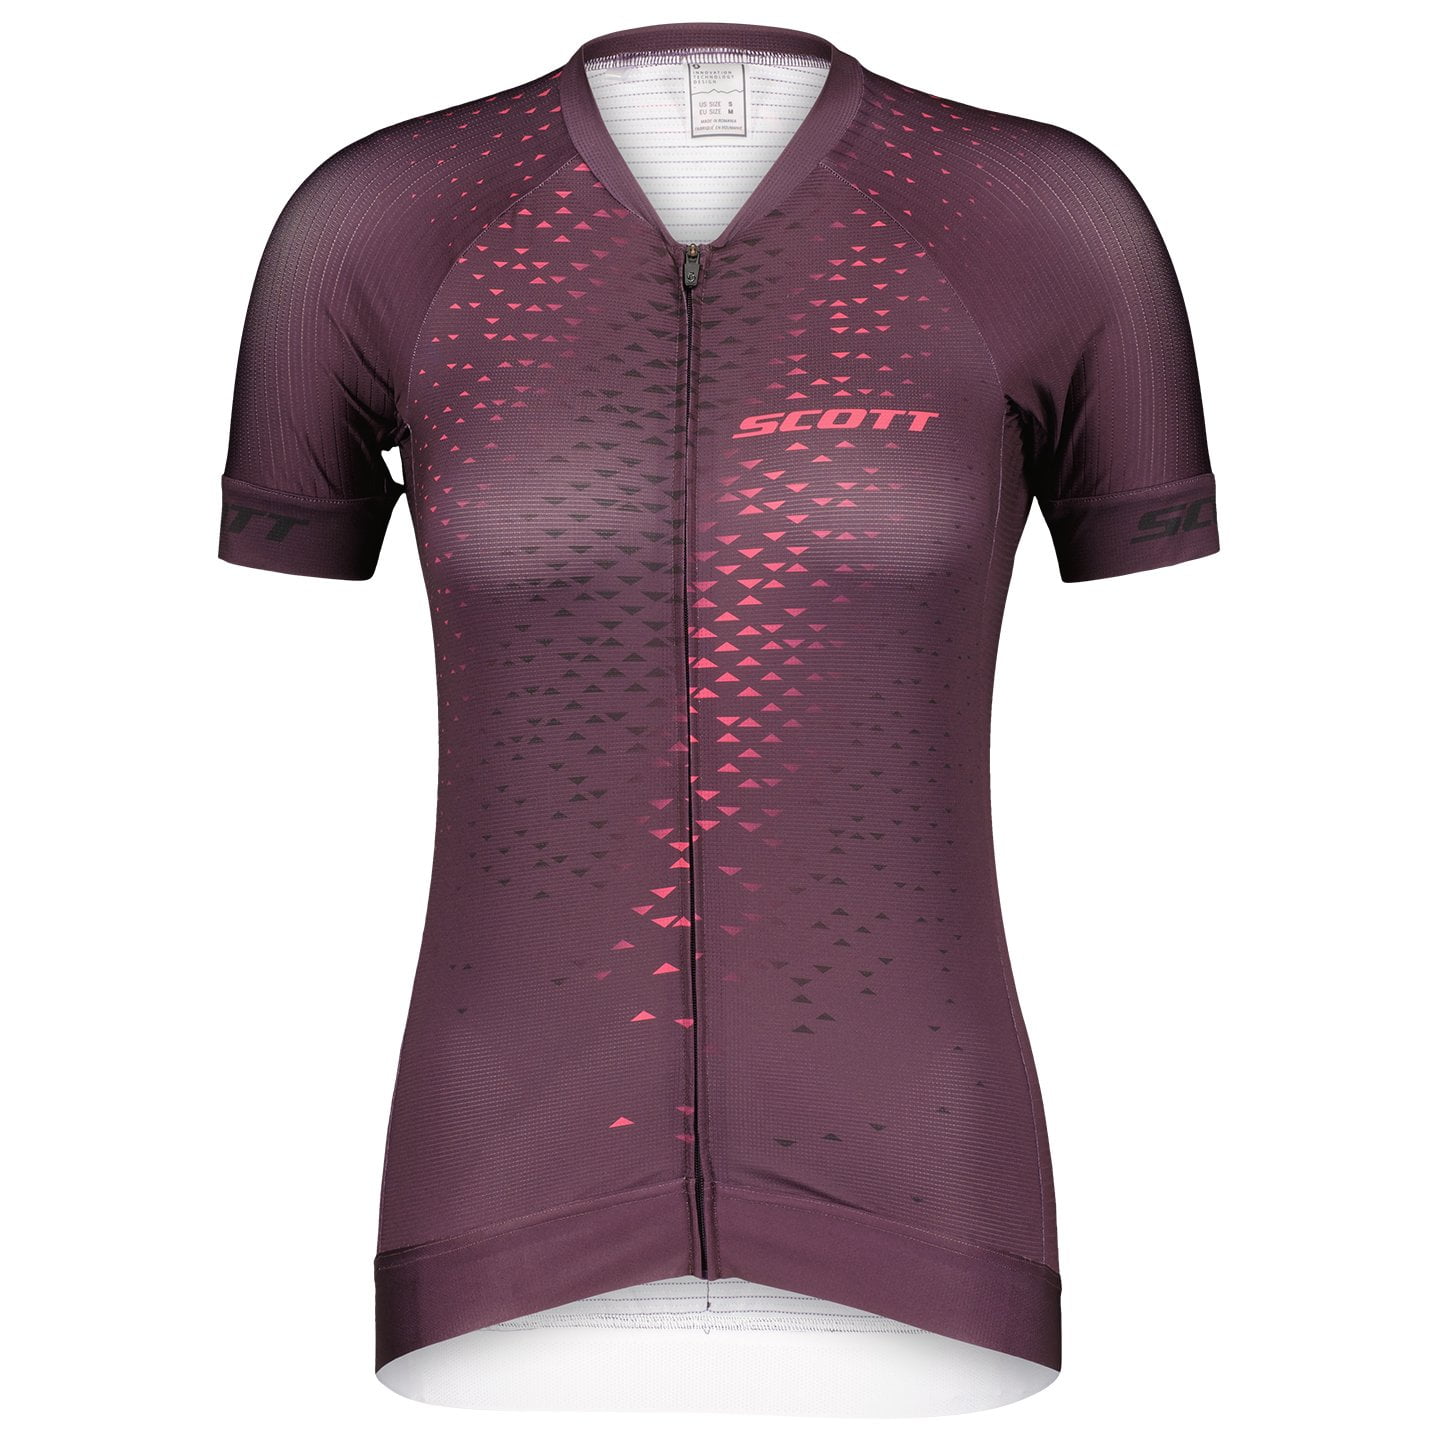 SCOTT RC Pro Women’s Jersey Women’s Short Sleeve Jersey, size L, Cycling jersey, Cycling clothing